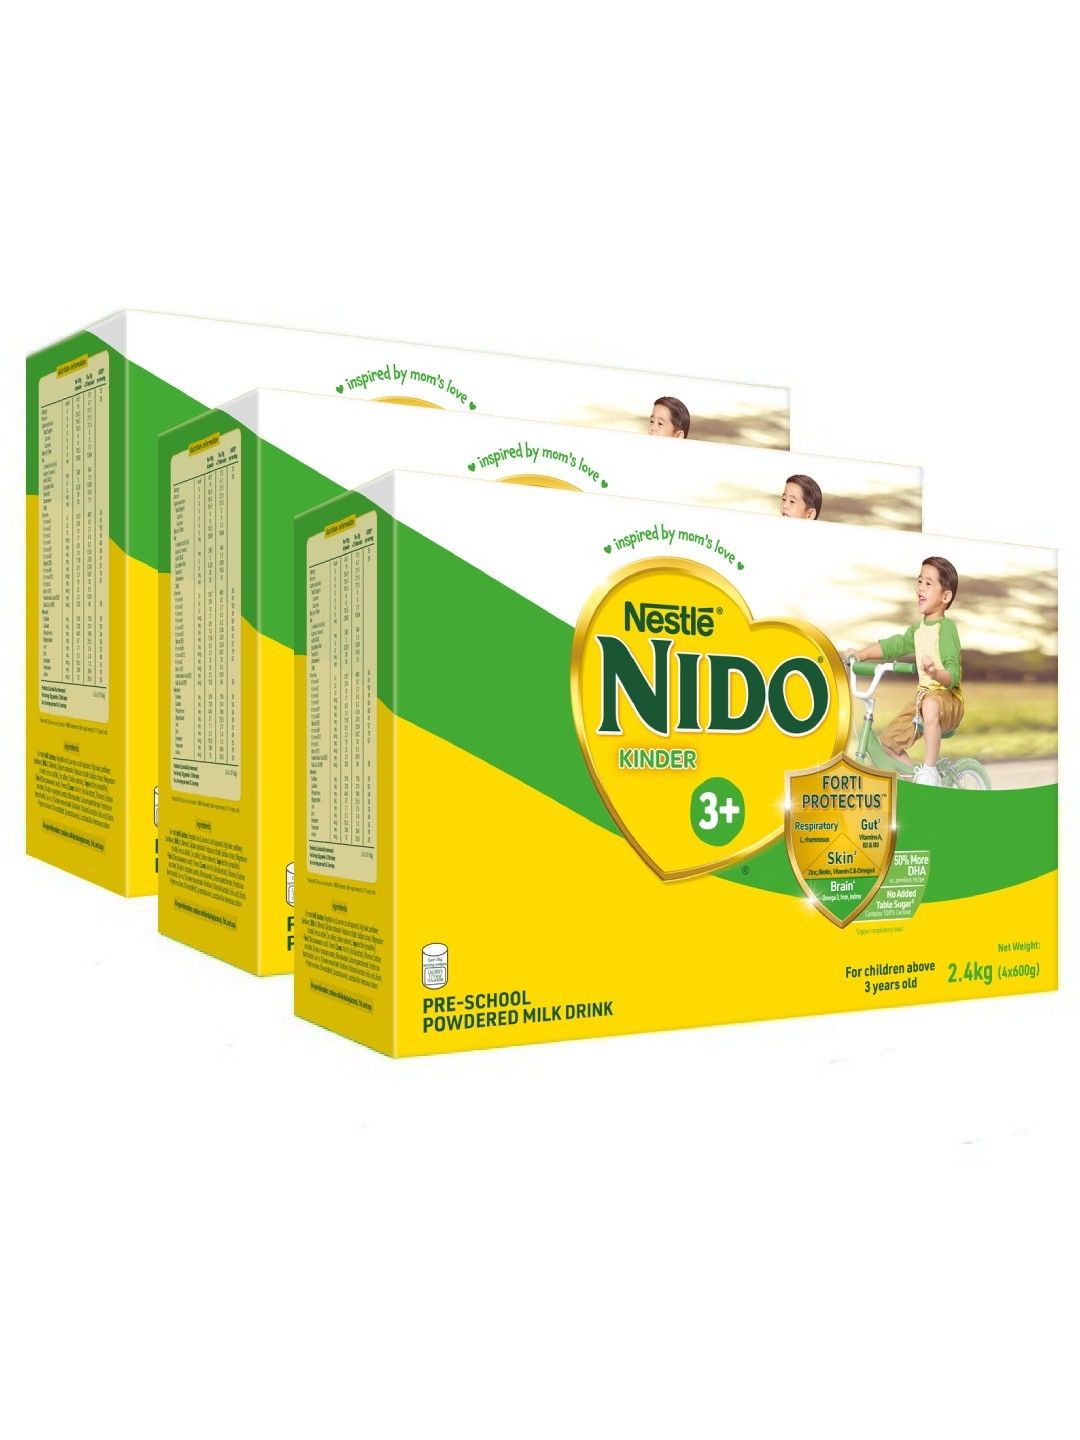 Nido 3+ Powdered Milk Drink For Pre-Schoolers Above 3 Years Old (2.4kg) - Bundle of 3